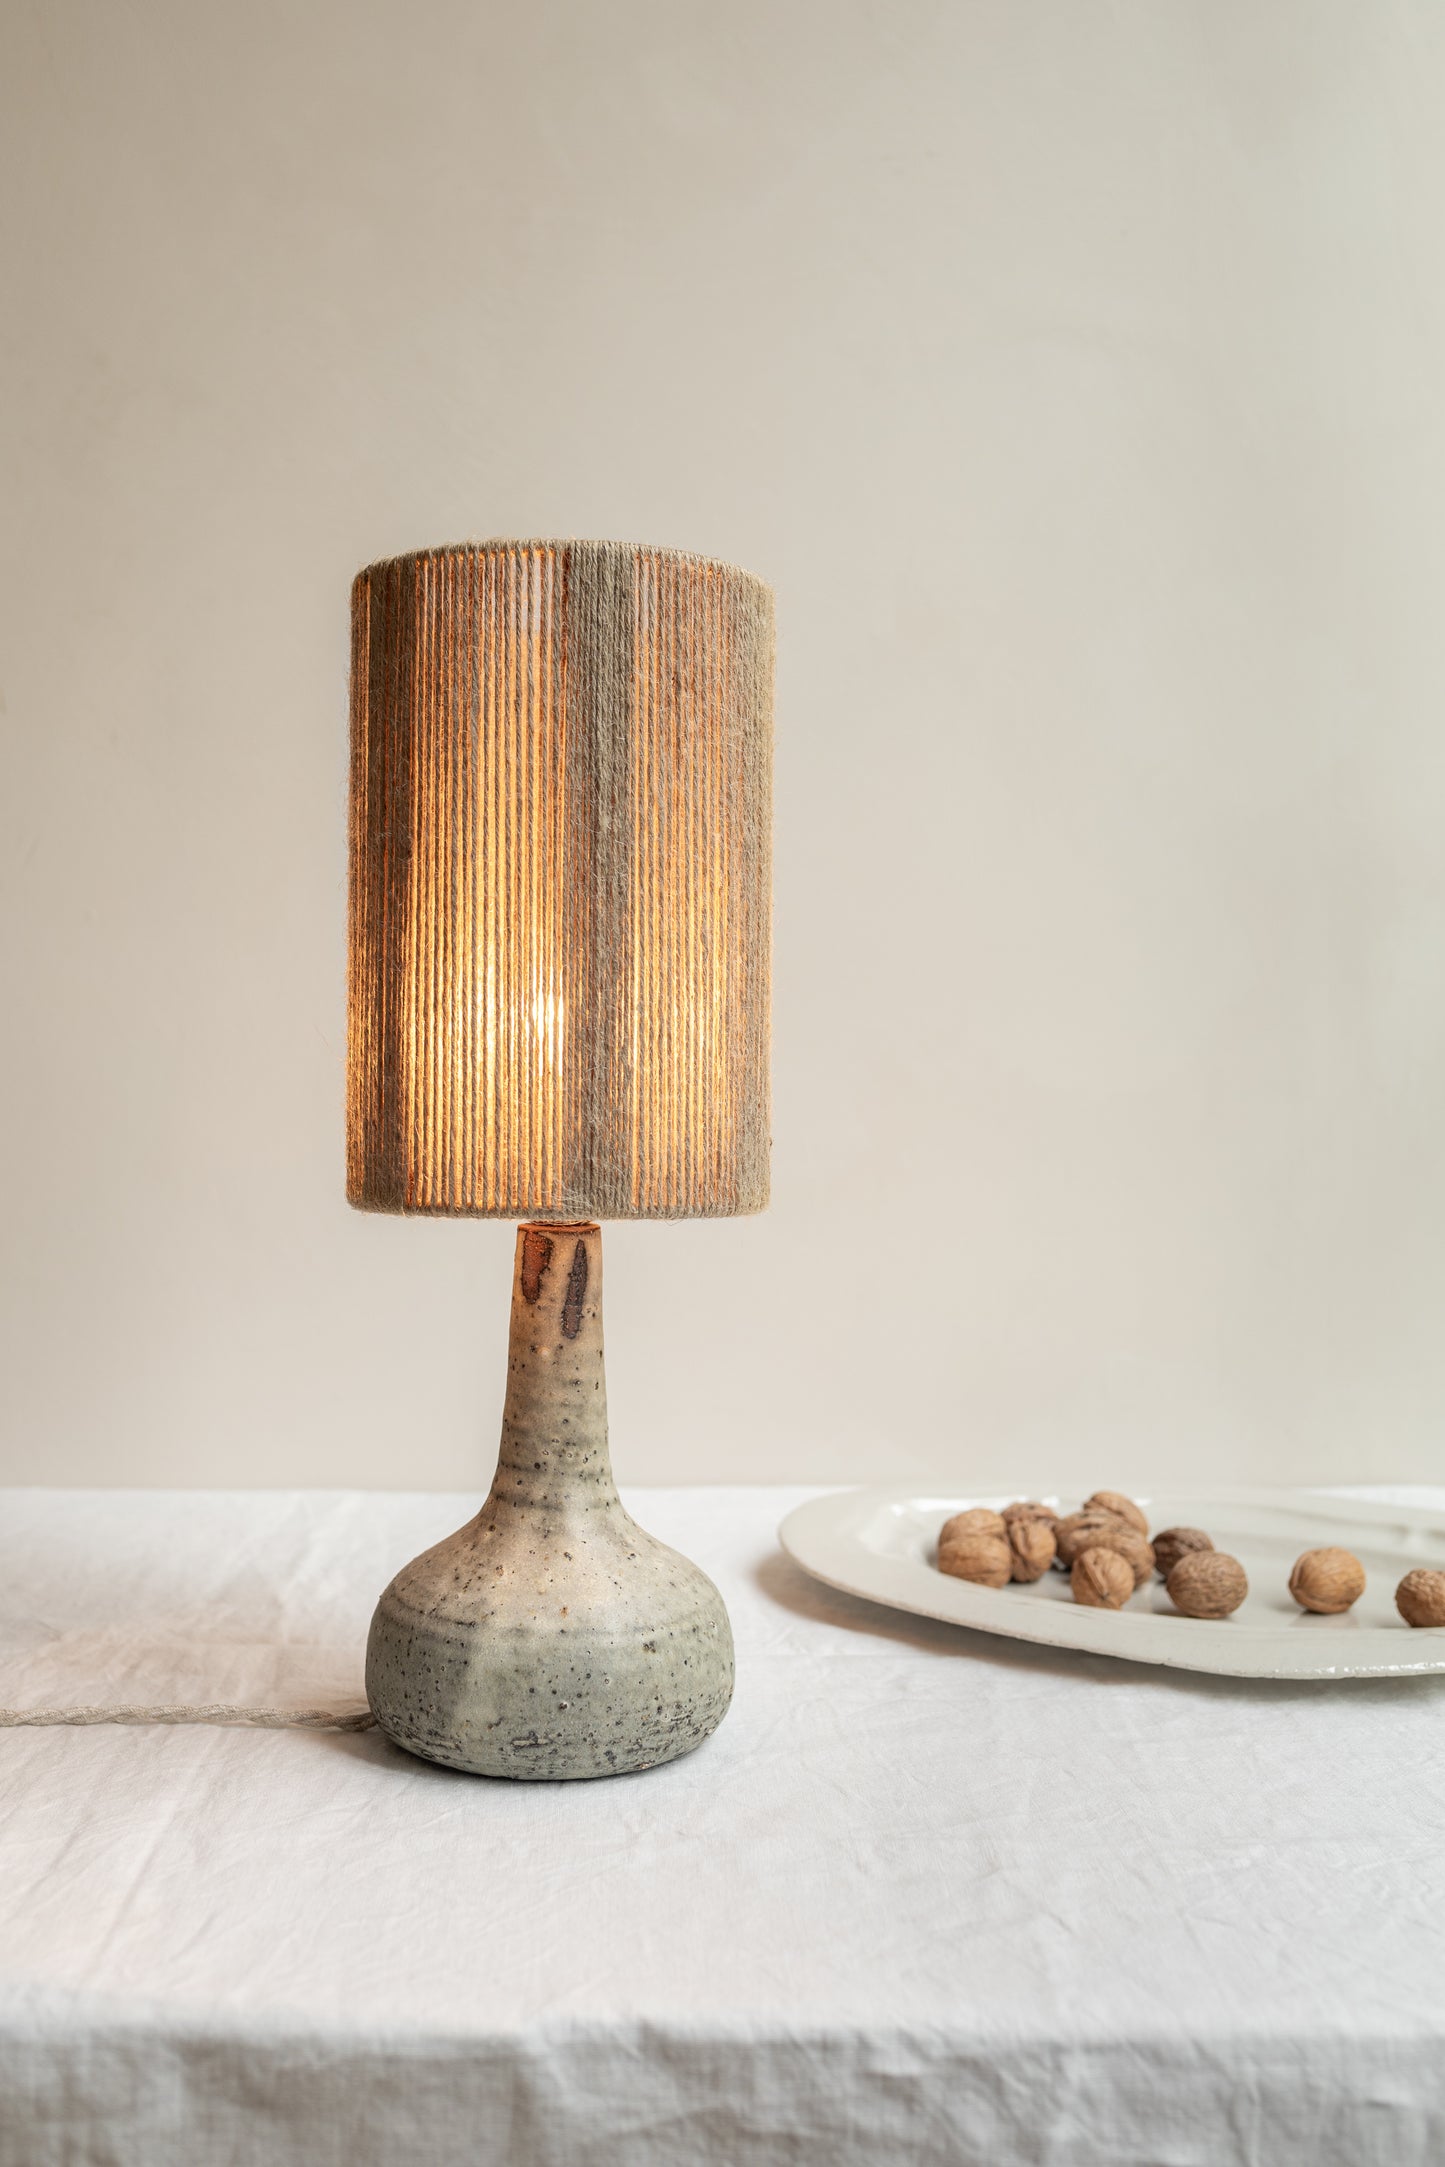 Handmade Grès Ceramics lamp with light on